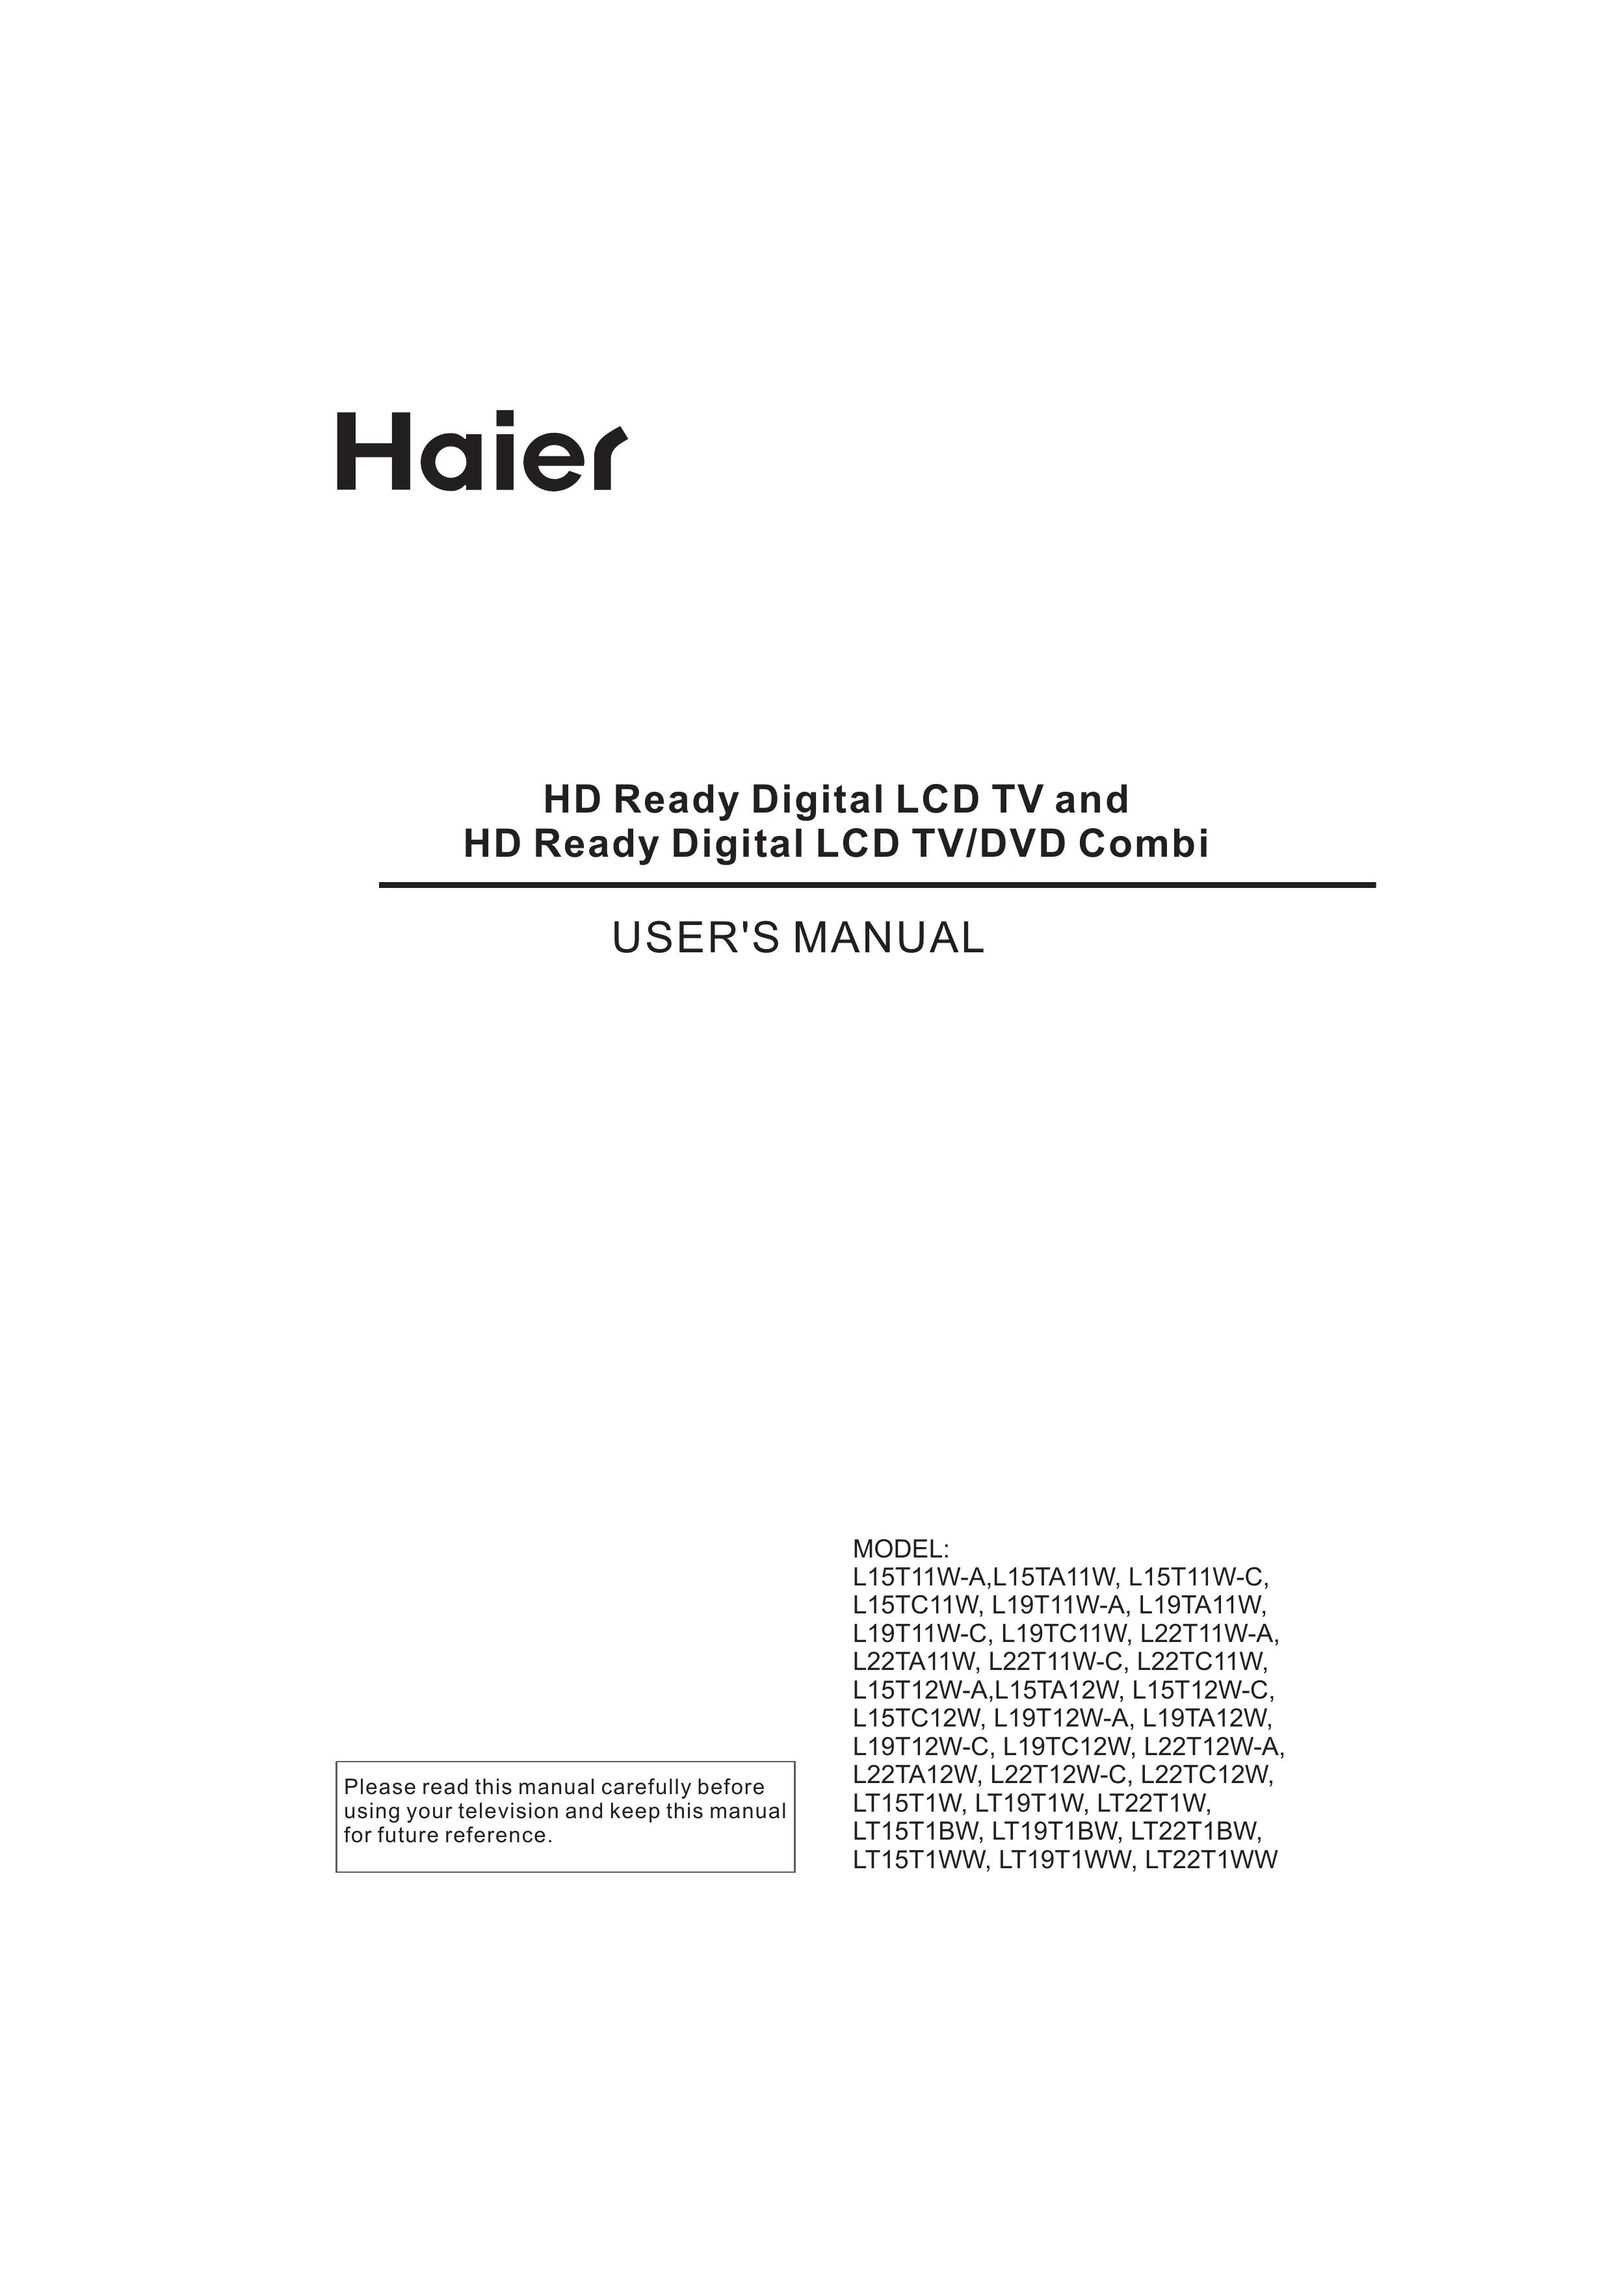 Haier L22T11W-C TV DVD Combo User Manual